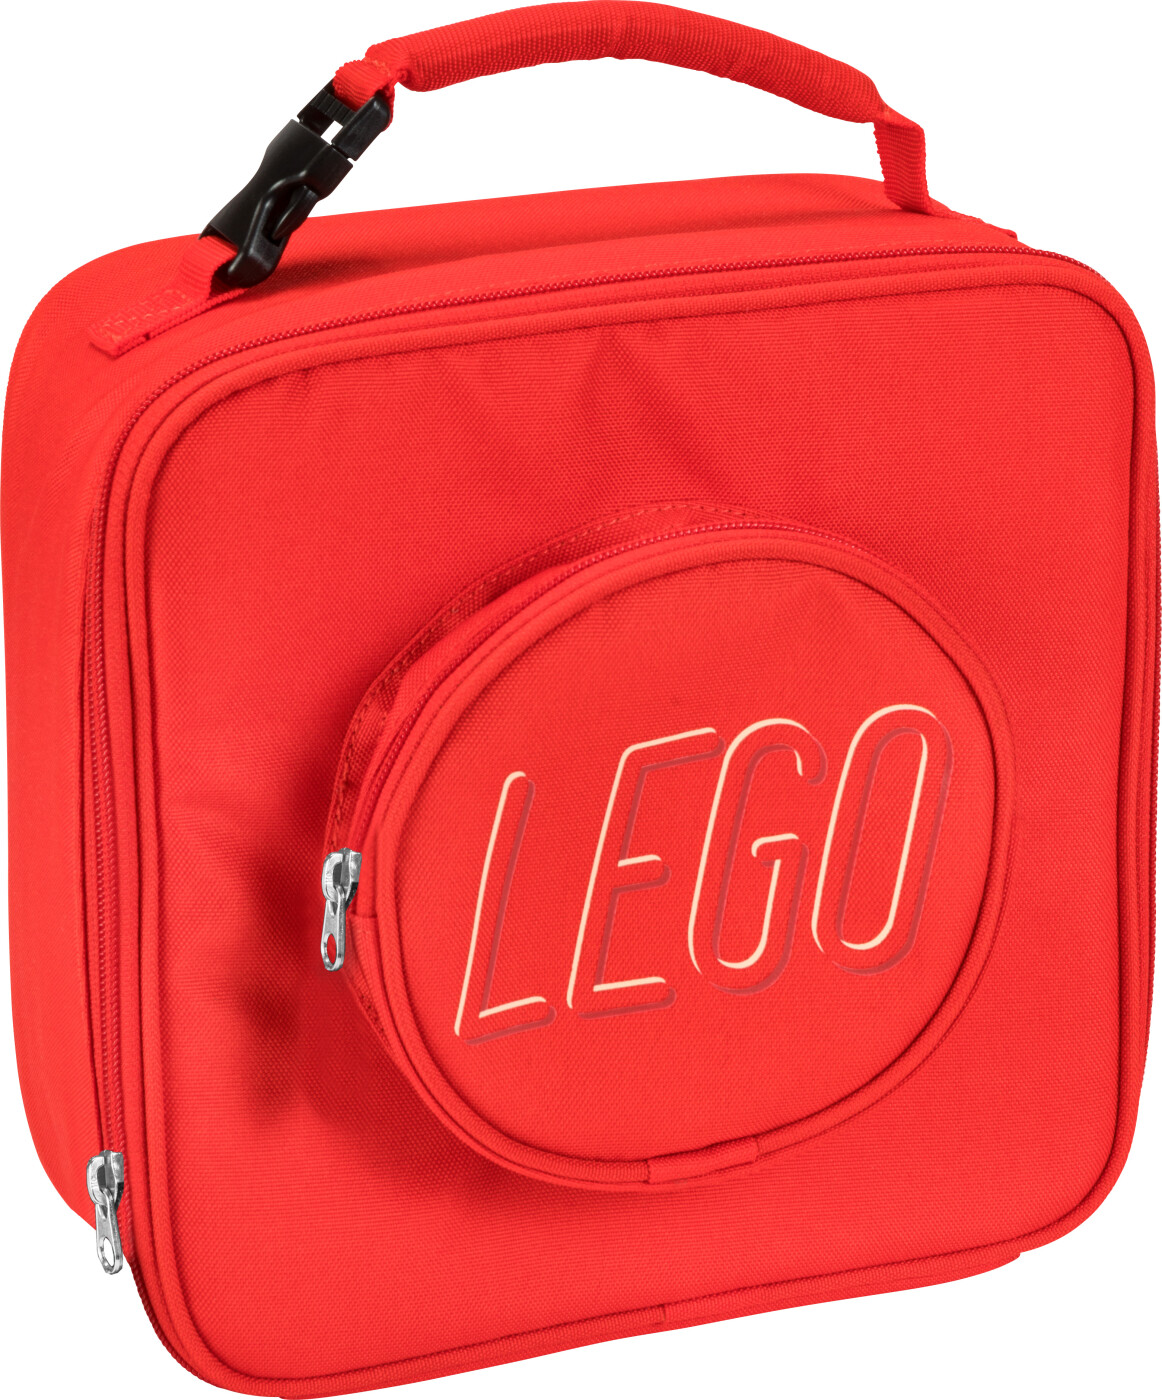 5: Lego - Legoklods Madpakke Taske - 5 L - Rød